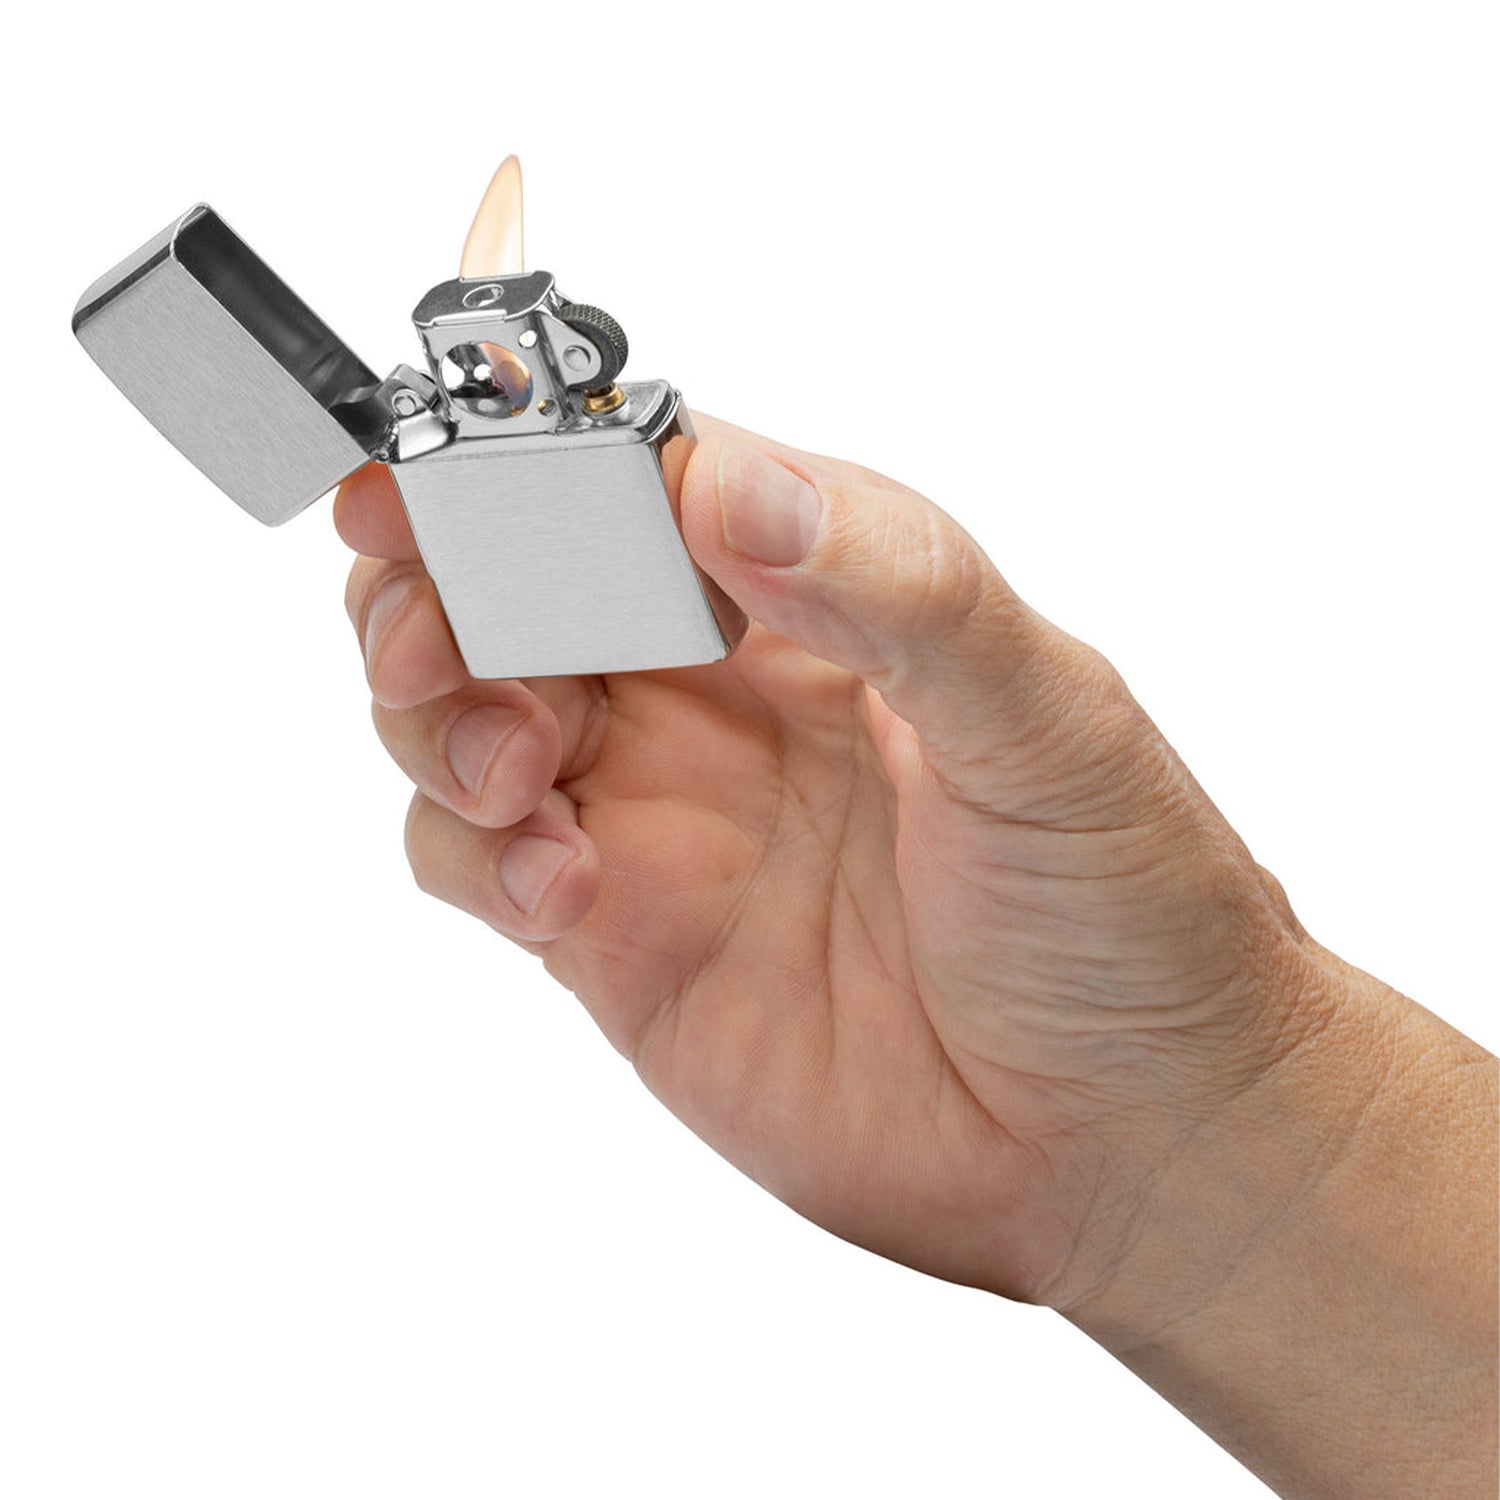 Zippo Pipe Lighter Insert - Lifetime Guarantee